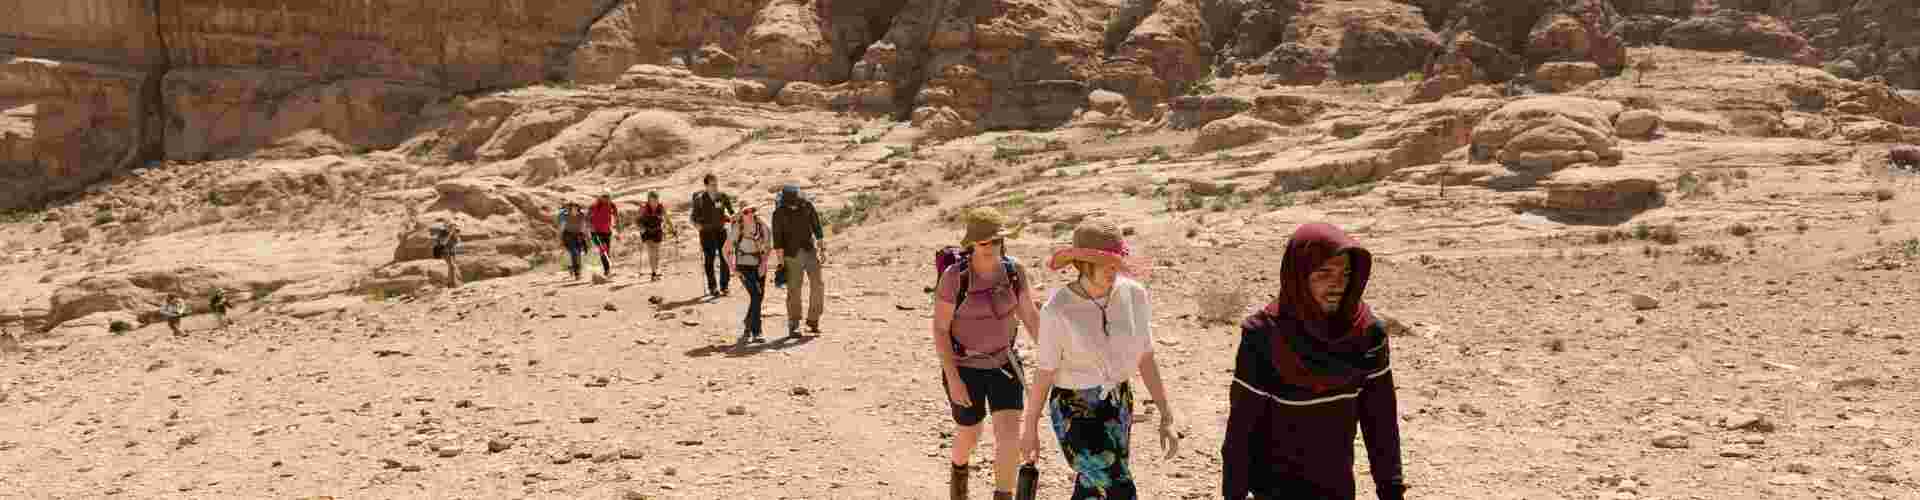 A group of travellers walking through the desert in Petra, Jordan 